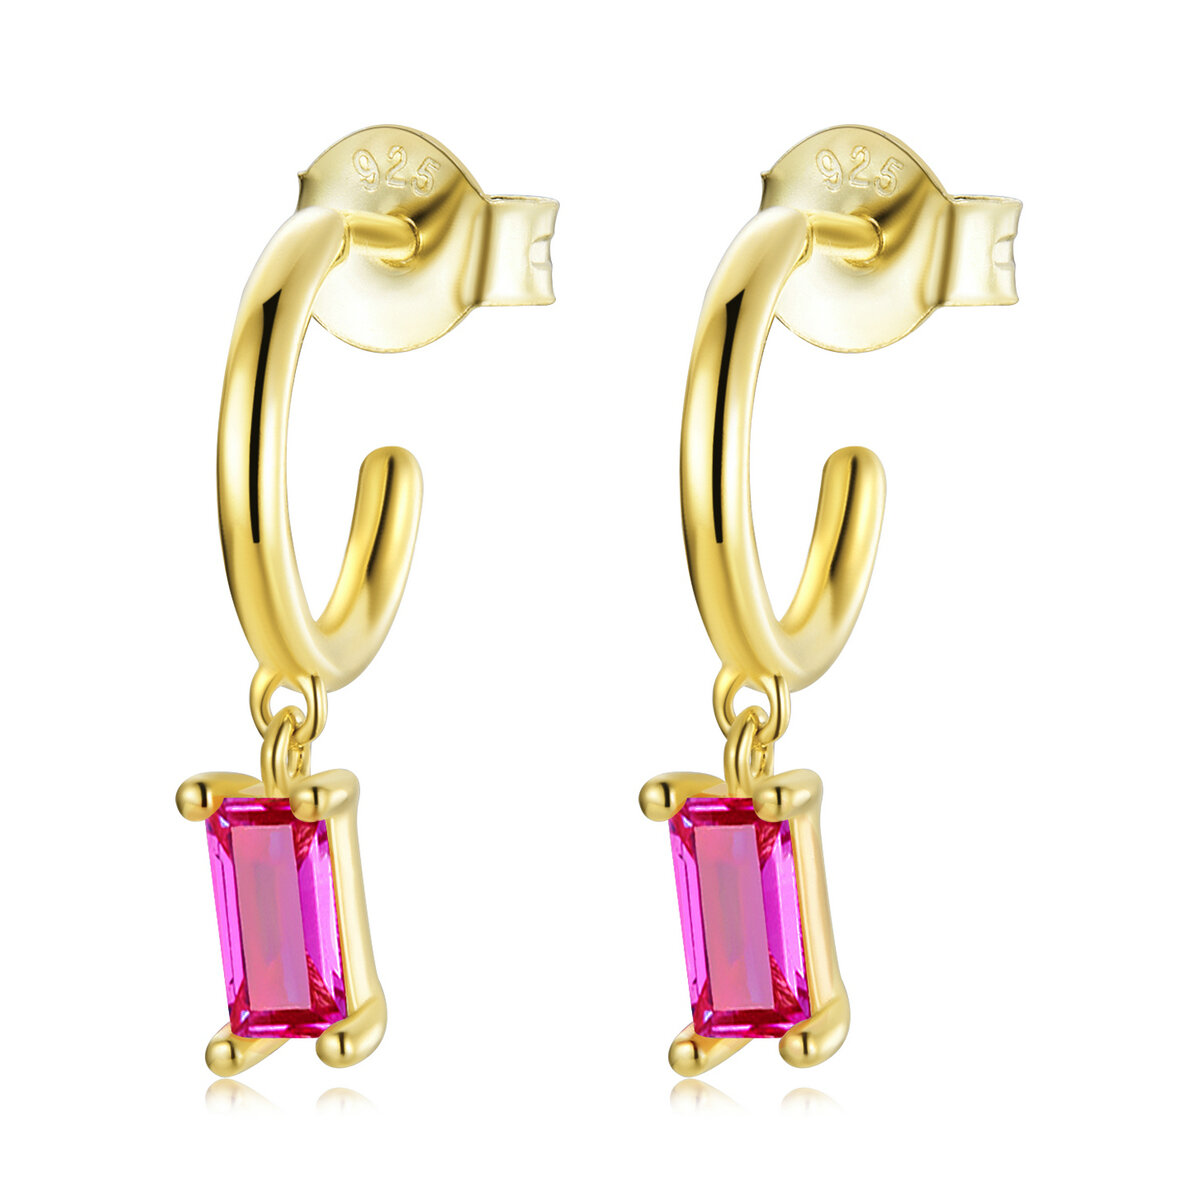 GemKing Colorful rectanglar zirconium earrings S925 Sterling Silver Earrings